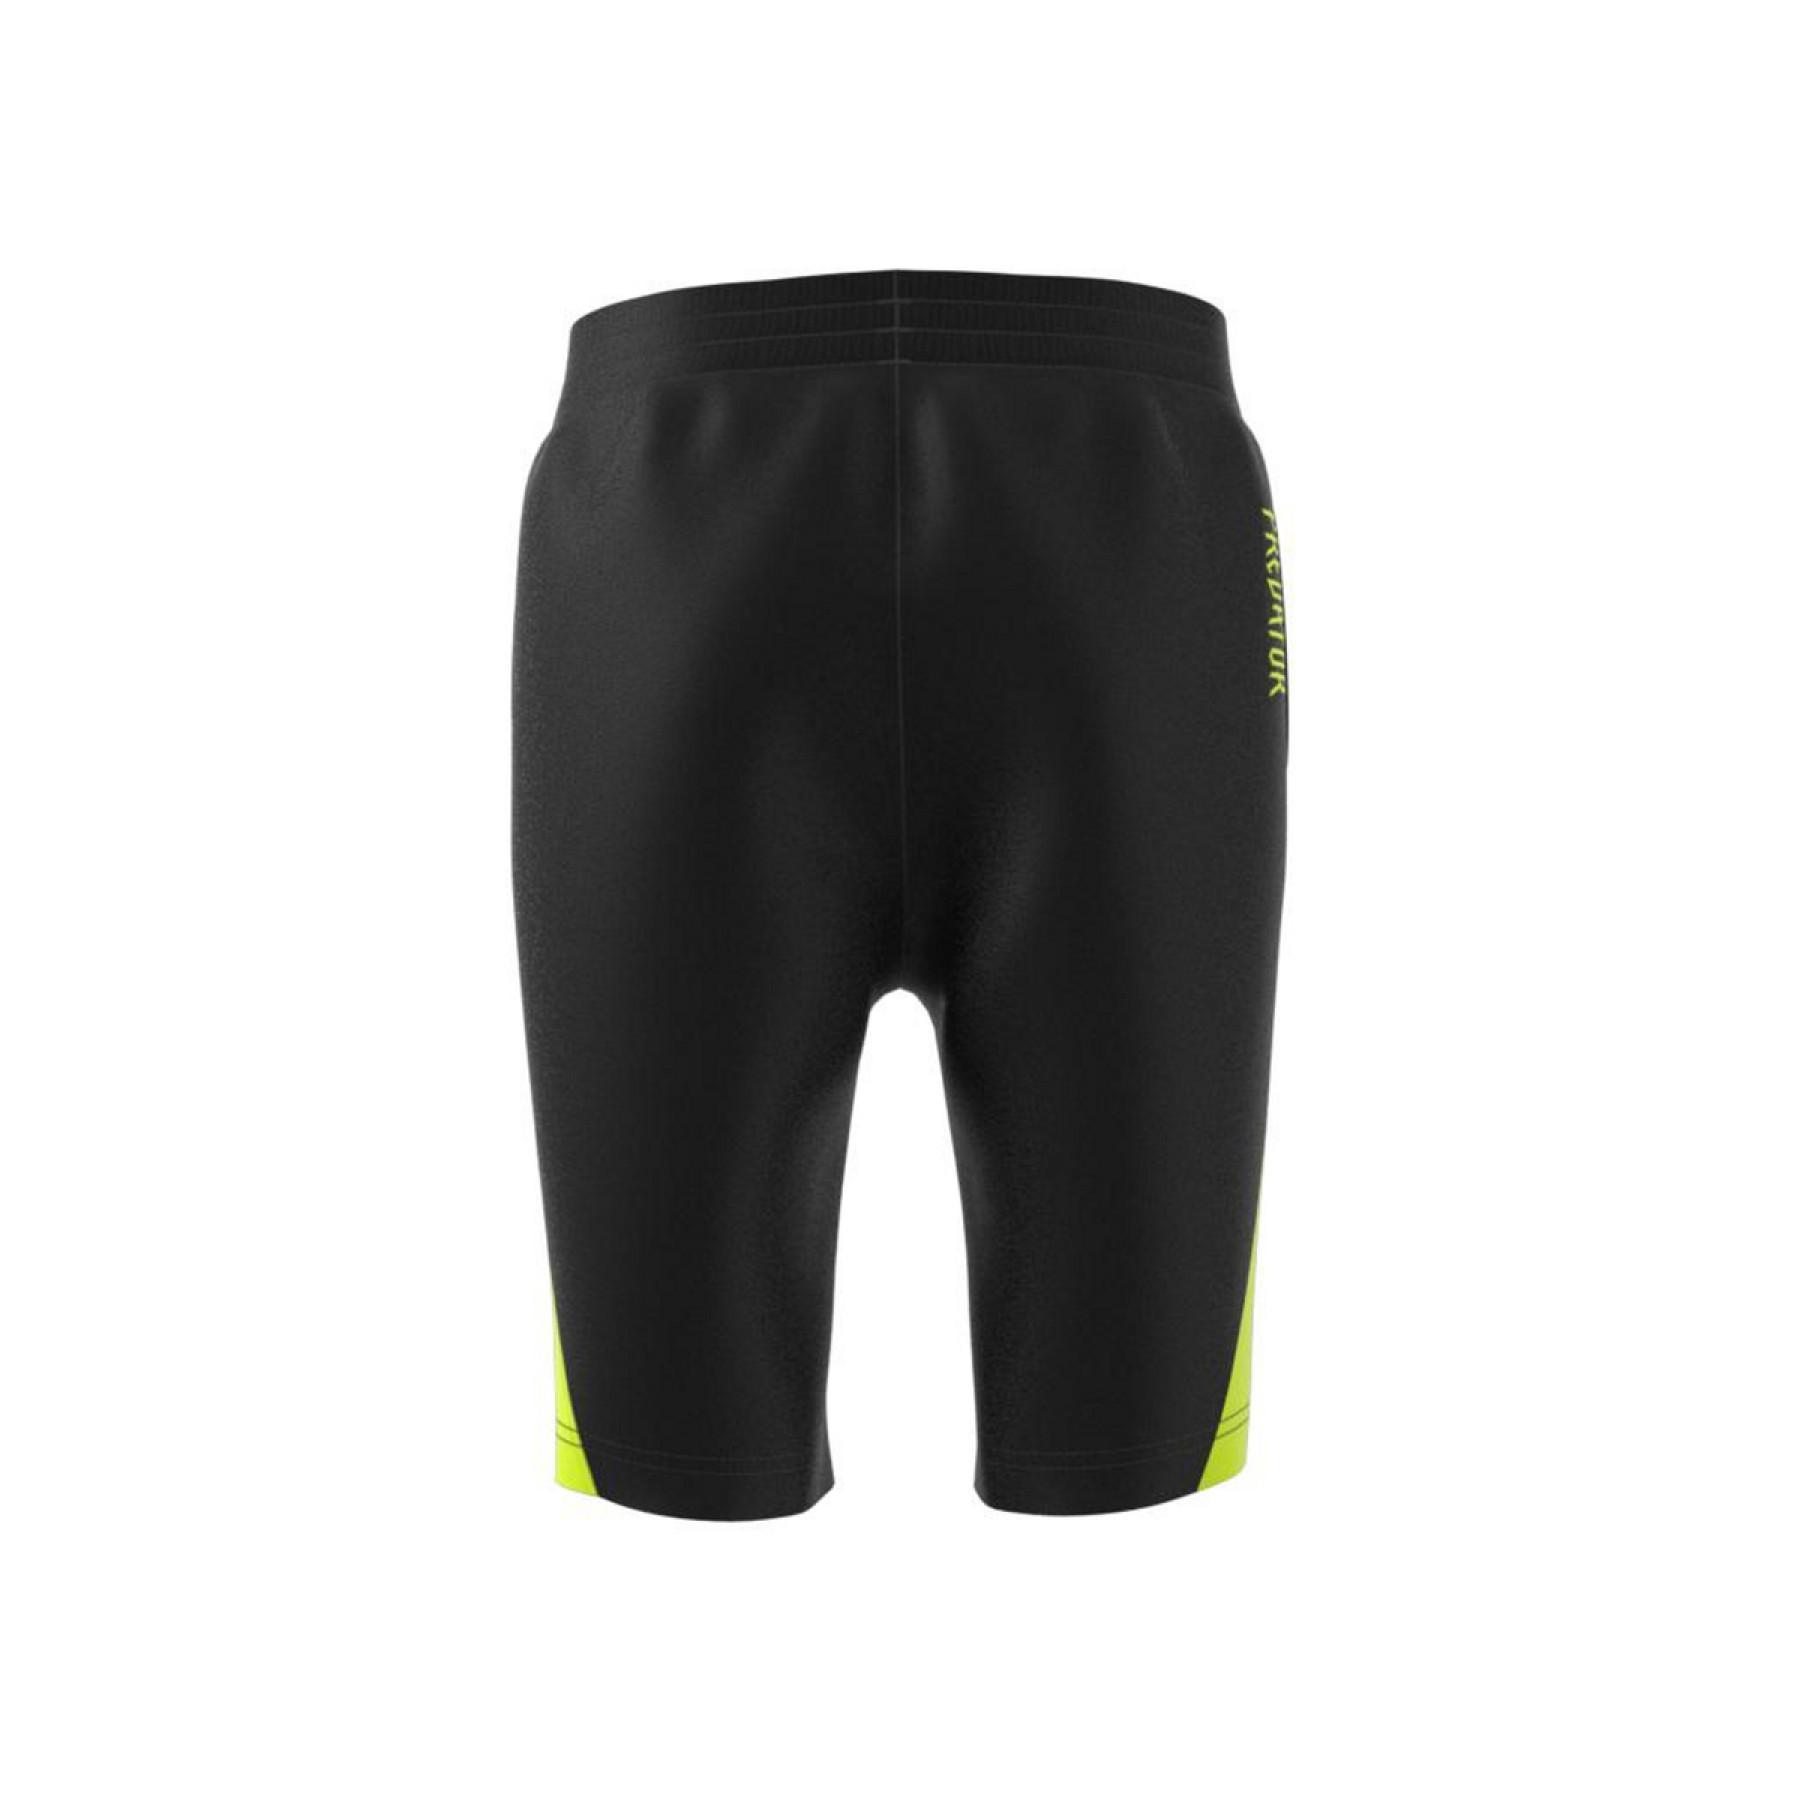 Kinder shorts adidas Predator Football-Inspired